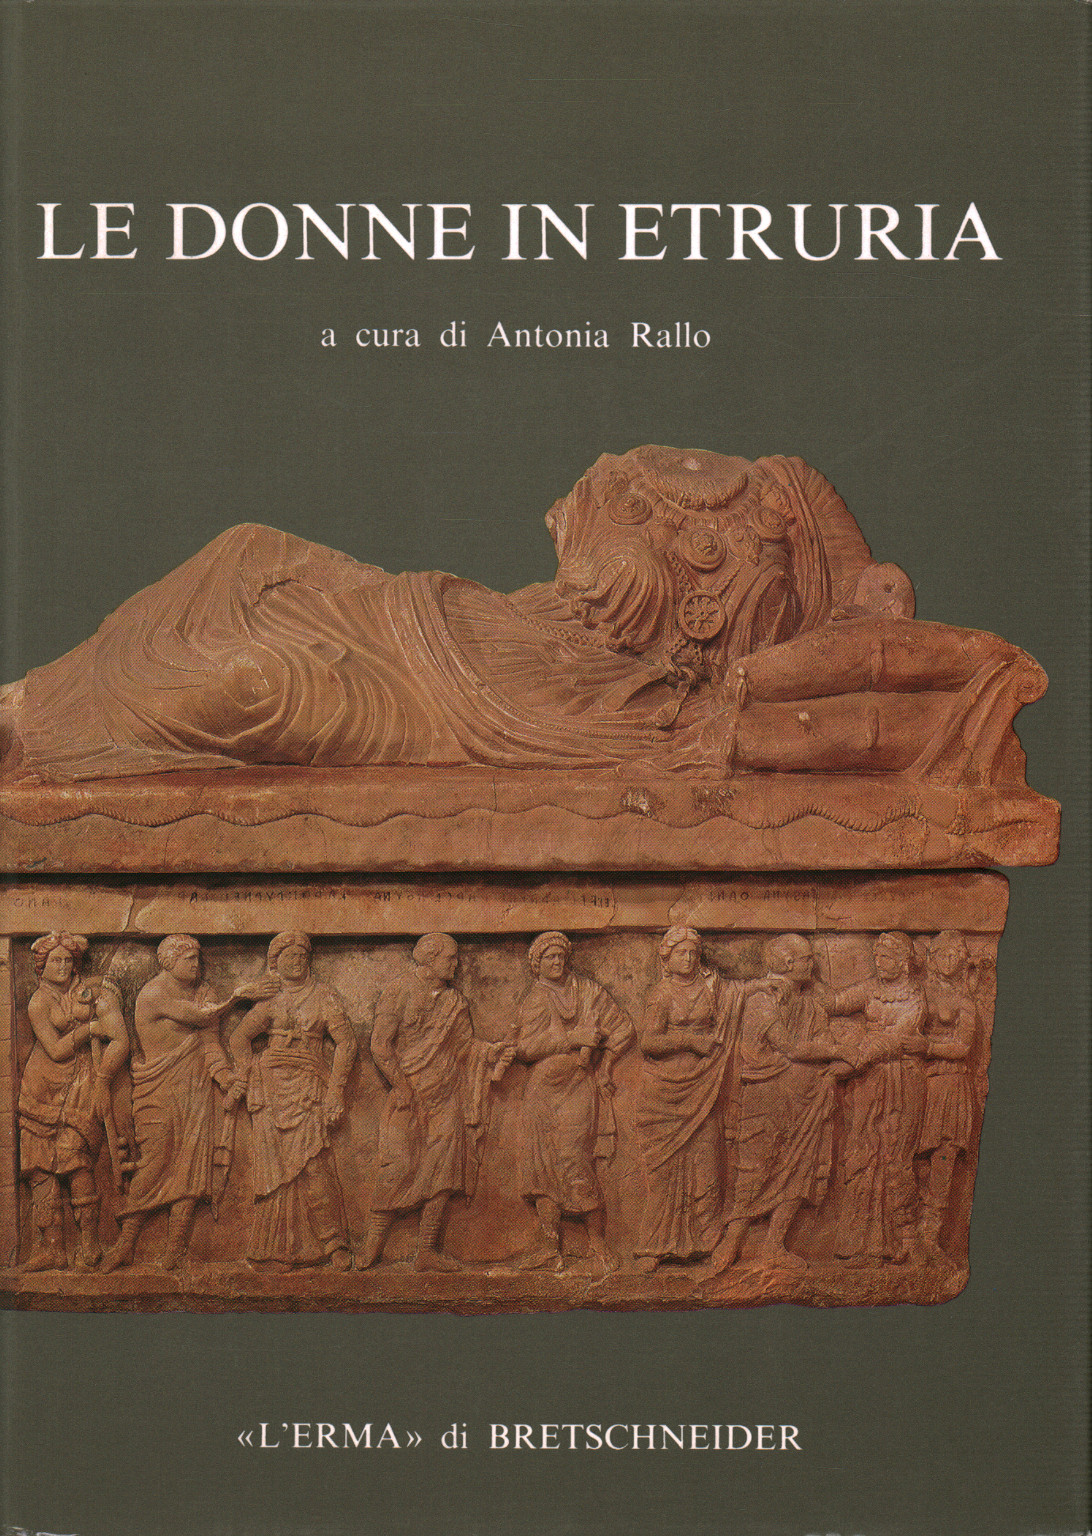 Women in Etruria